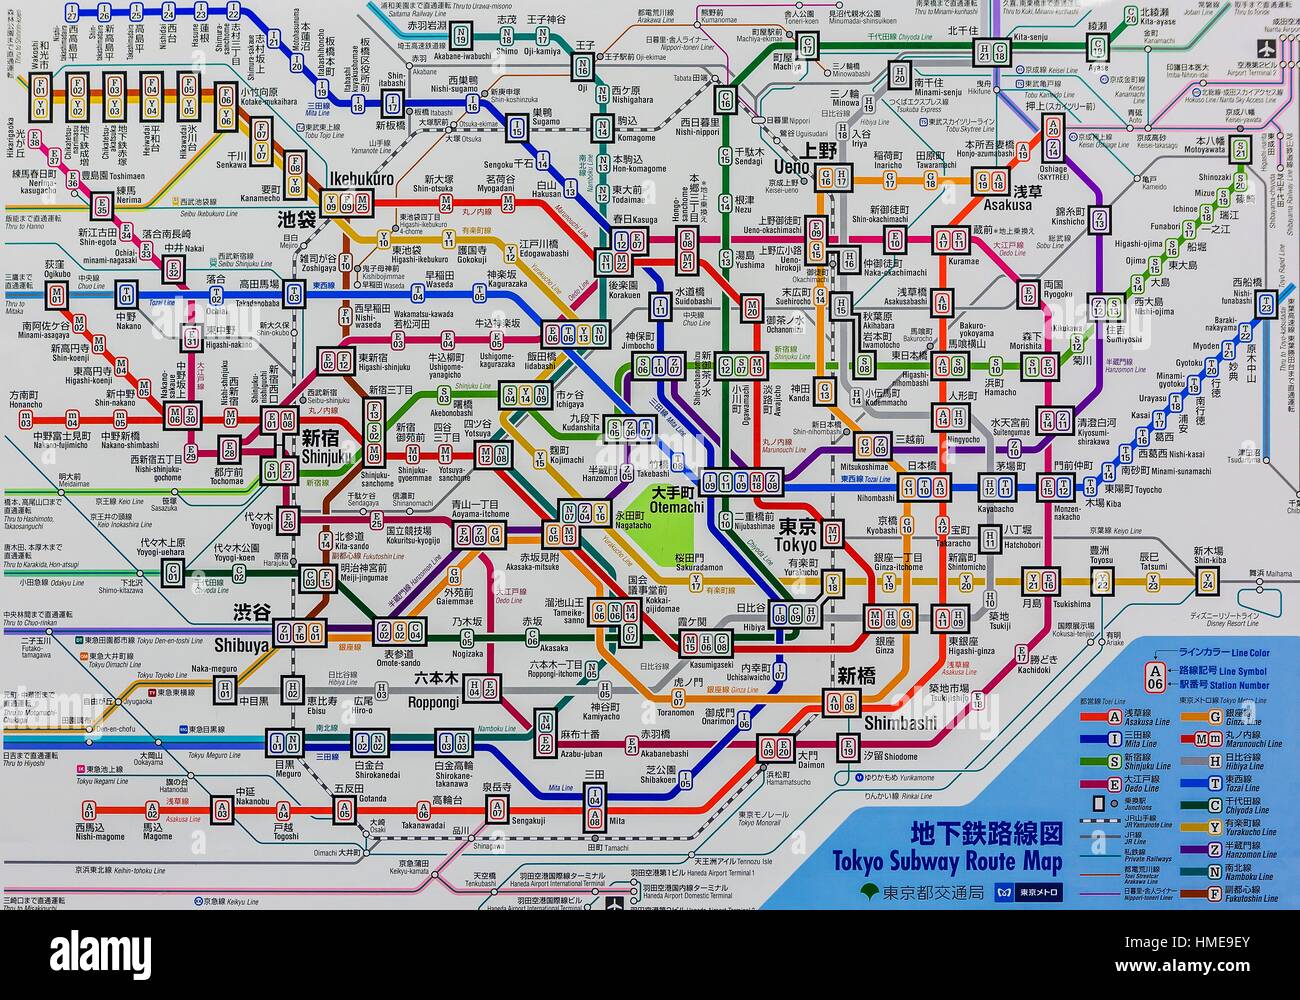 Japan, Tokyo. Tokyo Underground Station map Stock Photo - Alamy